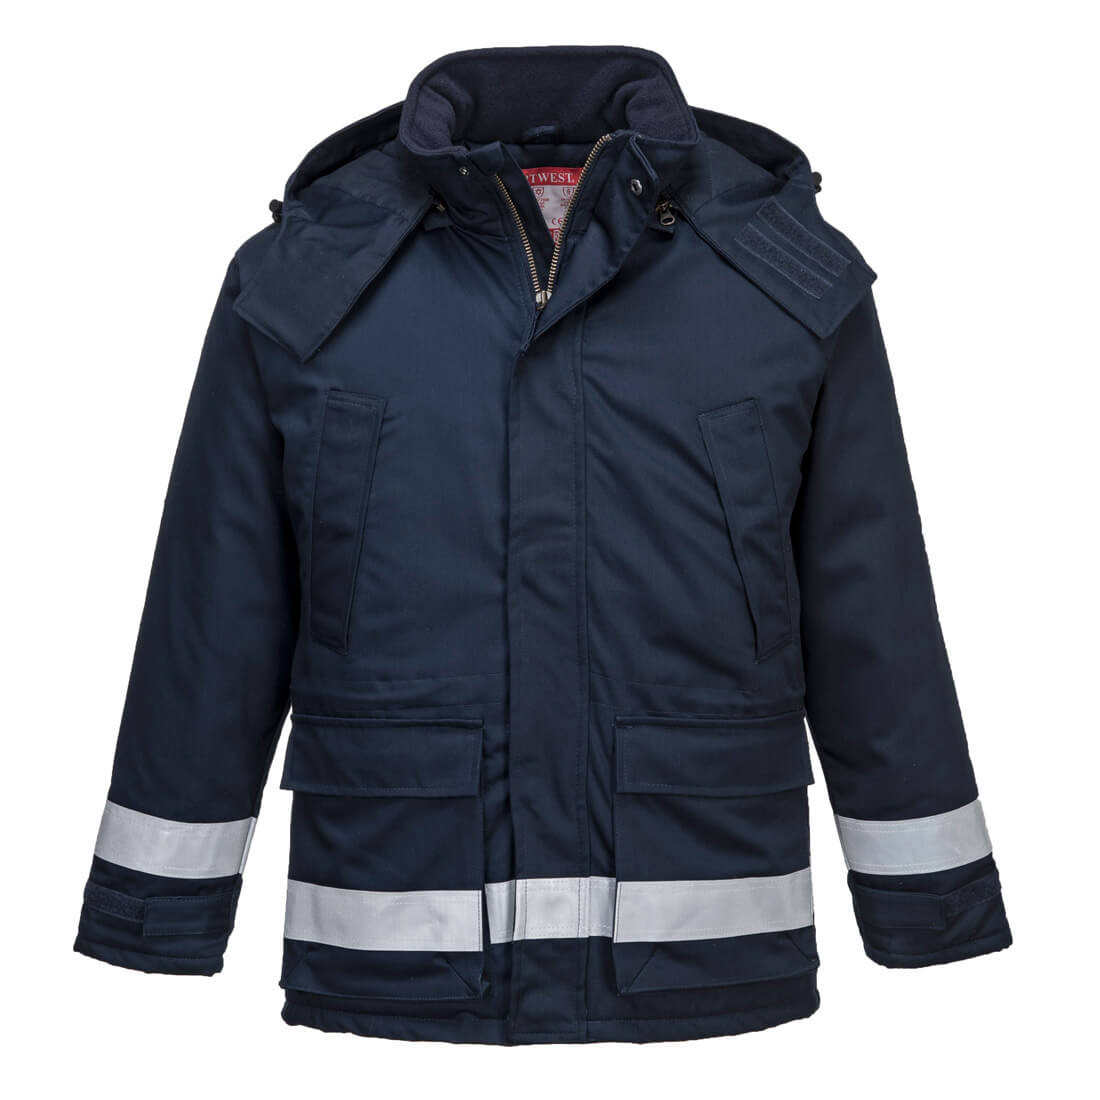 FR Anti-Static Winter Jacket - Safetywear